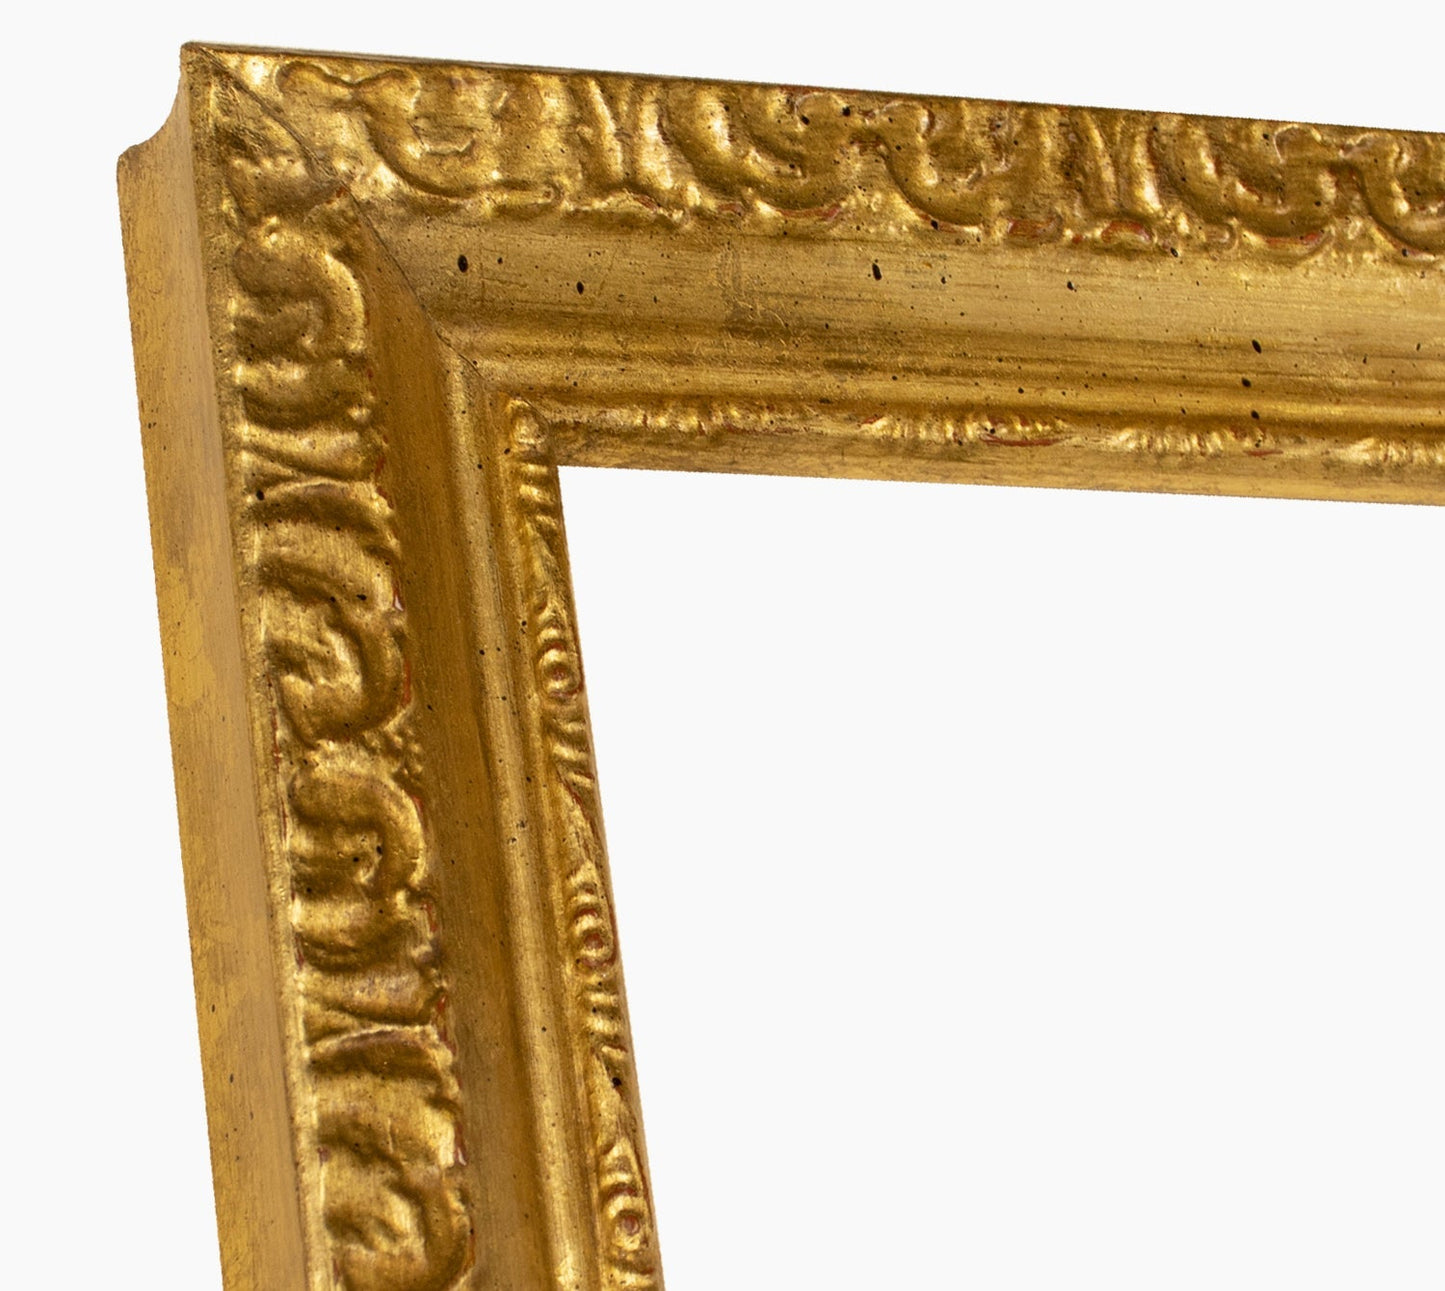 325.010 cadre en bois à la feuille d'or mesure de profil 45x30 mm Lombarda cornici S.n.c.